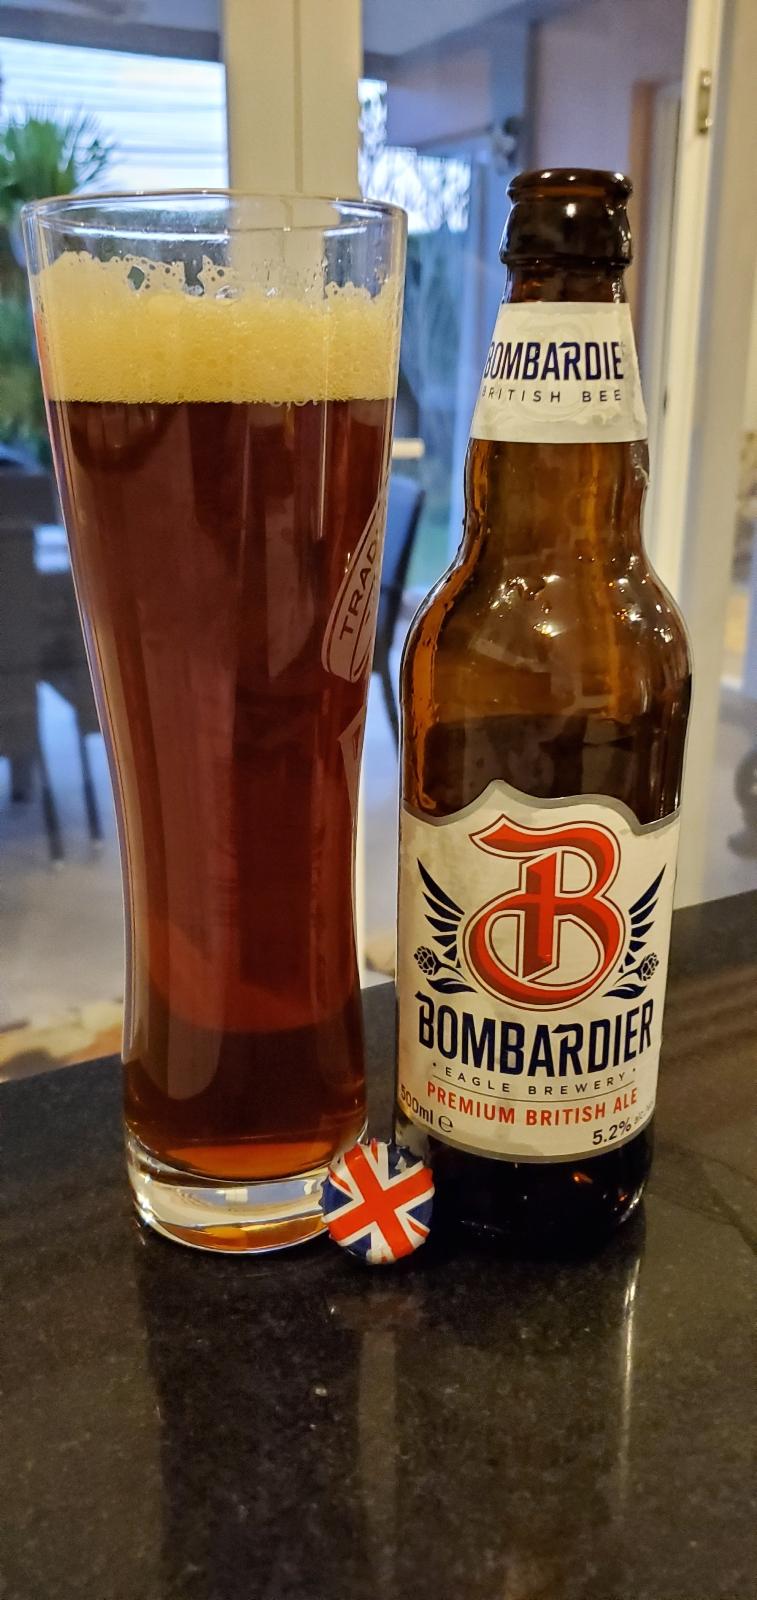 Wells Bombardier Premium Brittish Ale